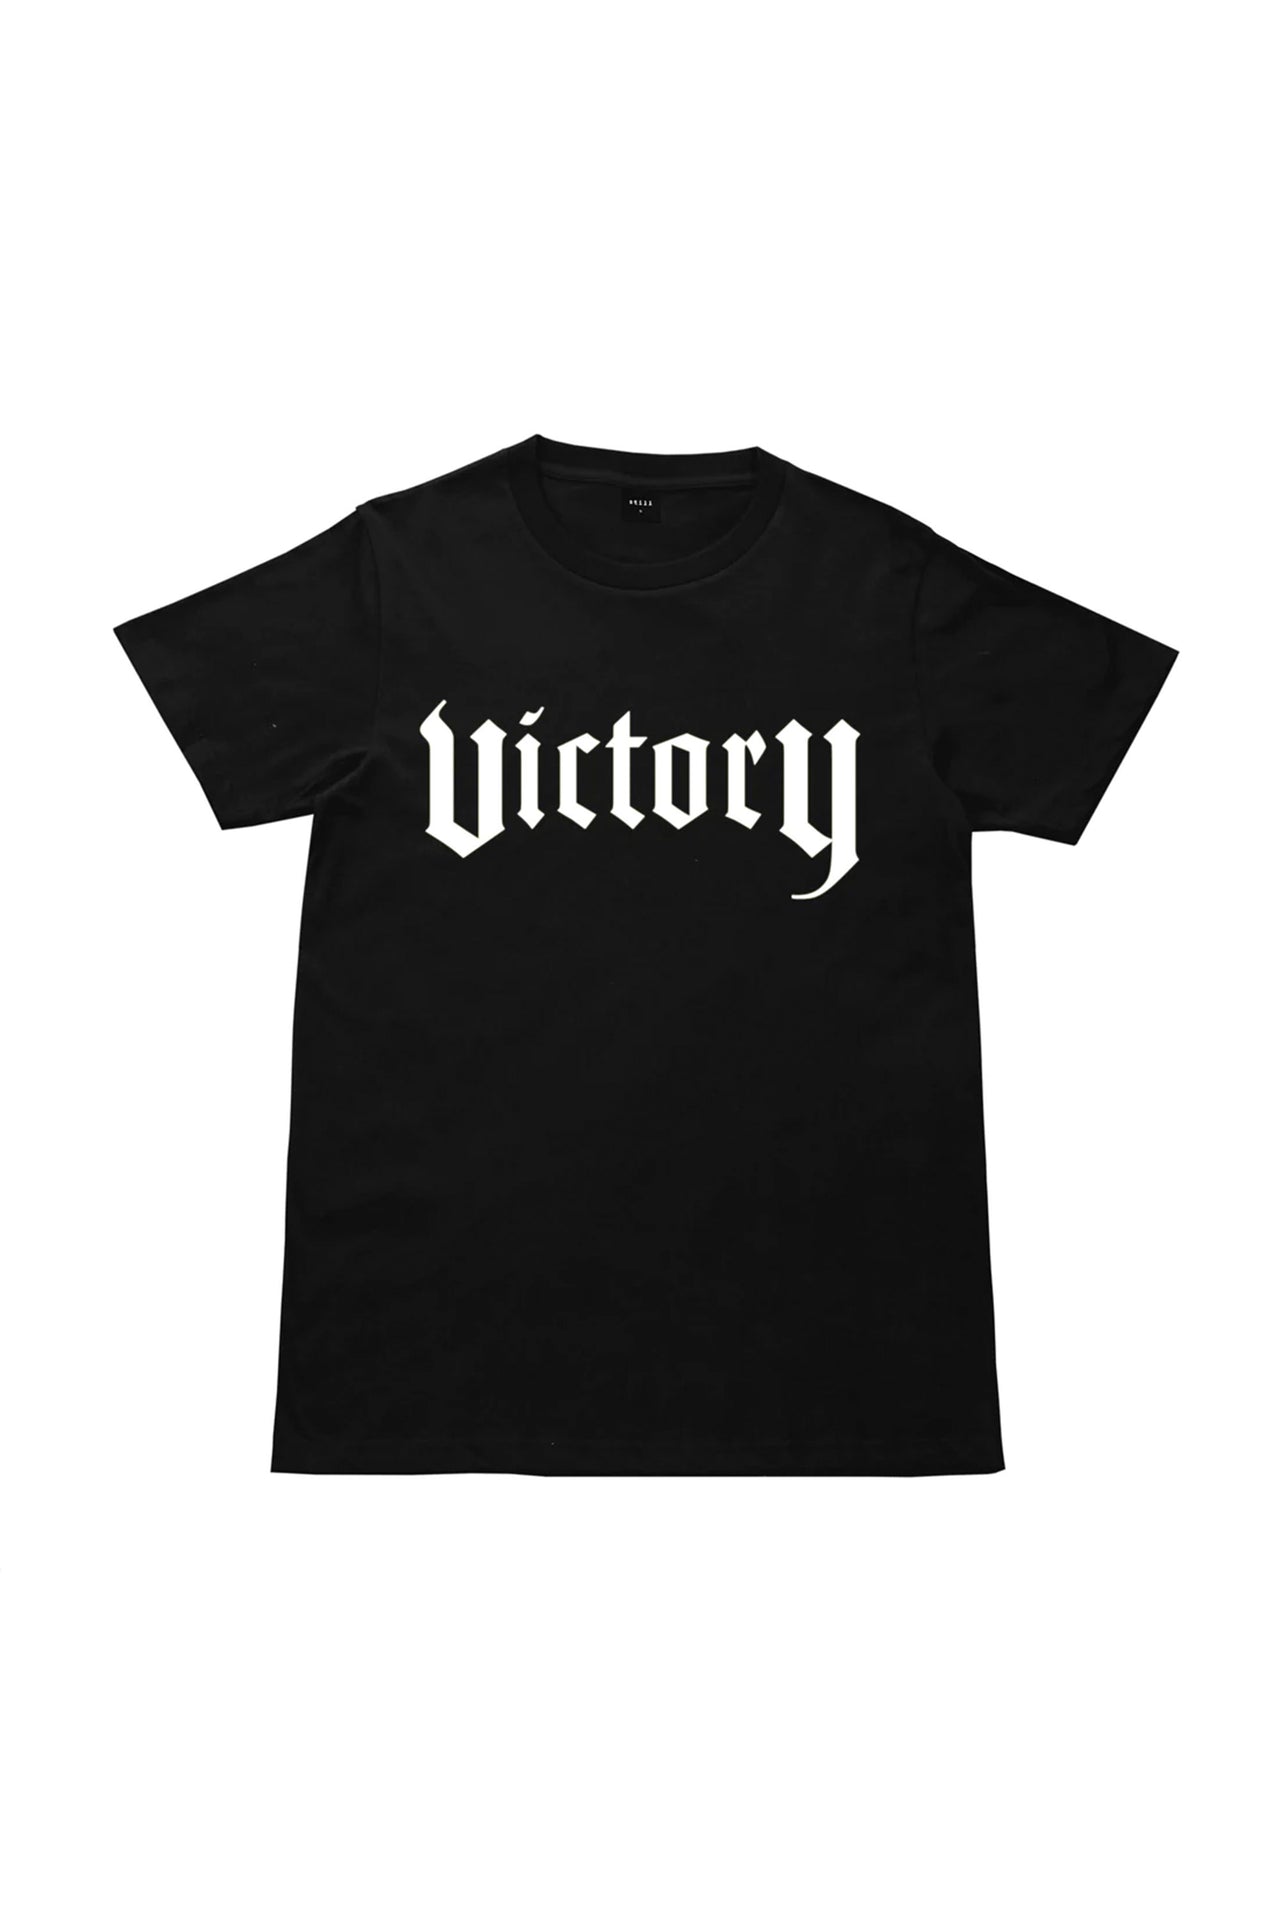 VICTORY Tee (Black)